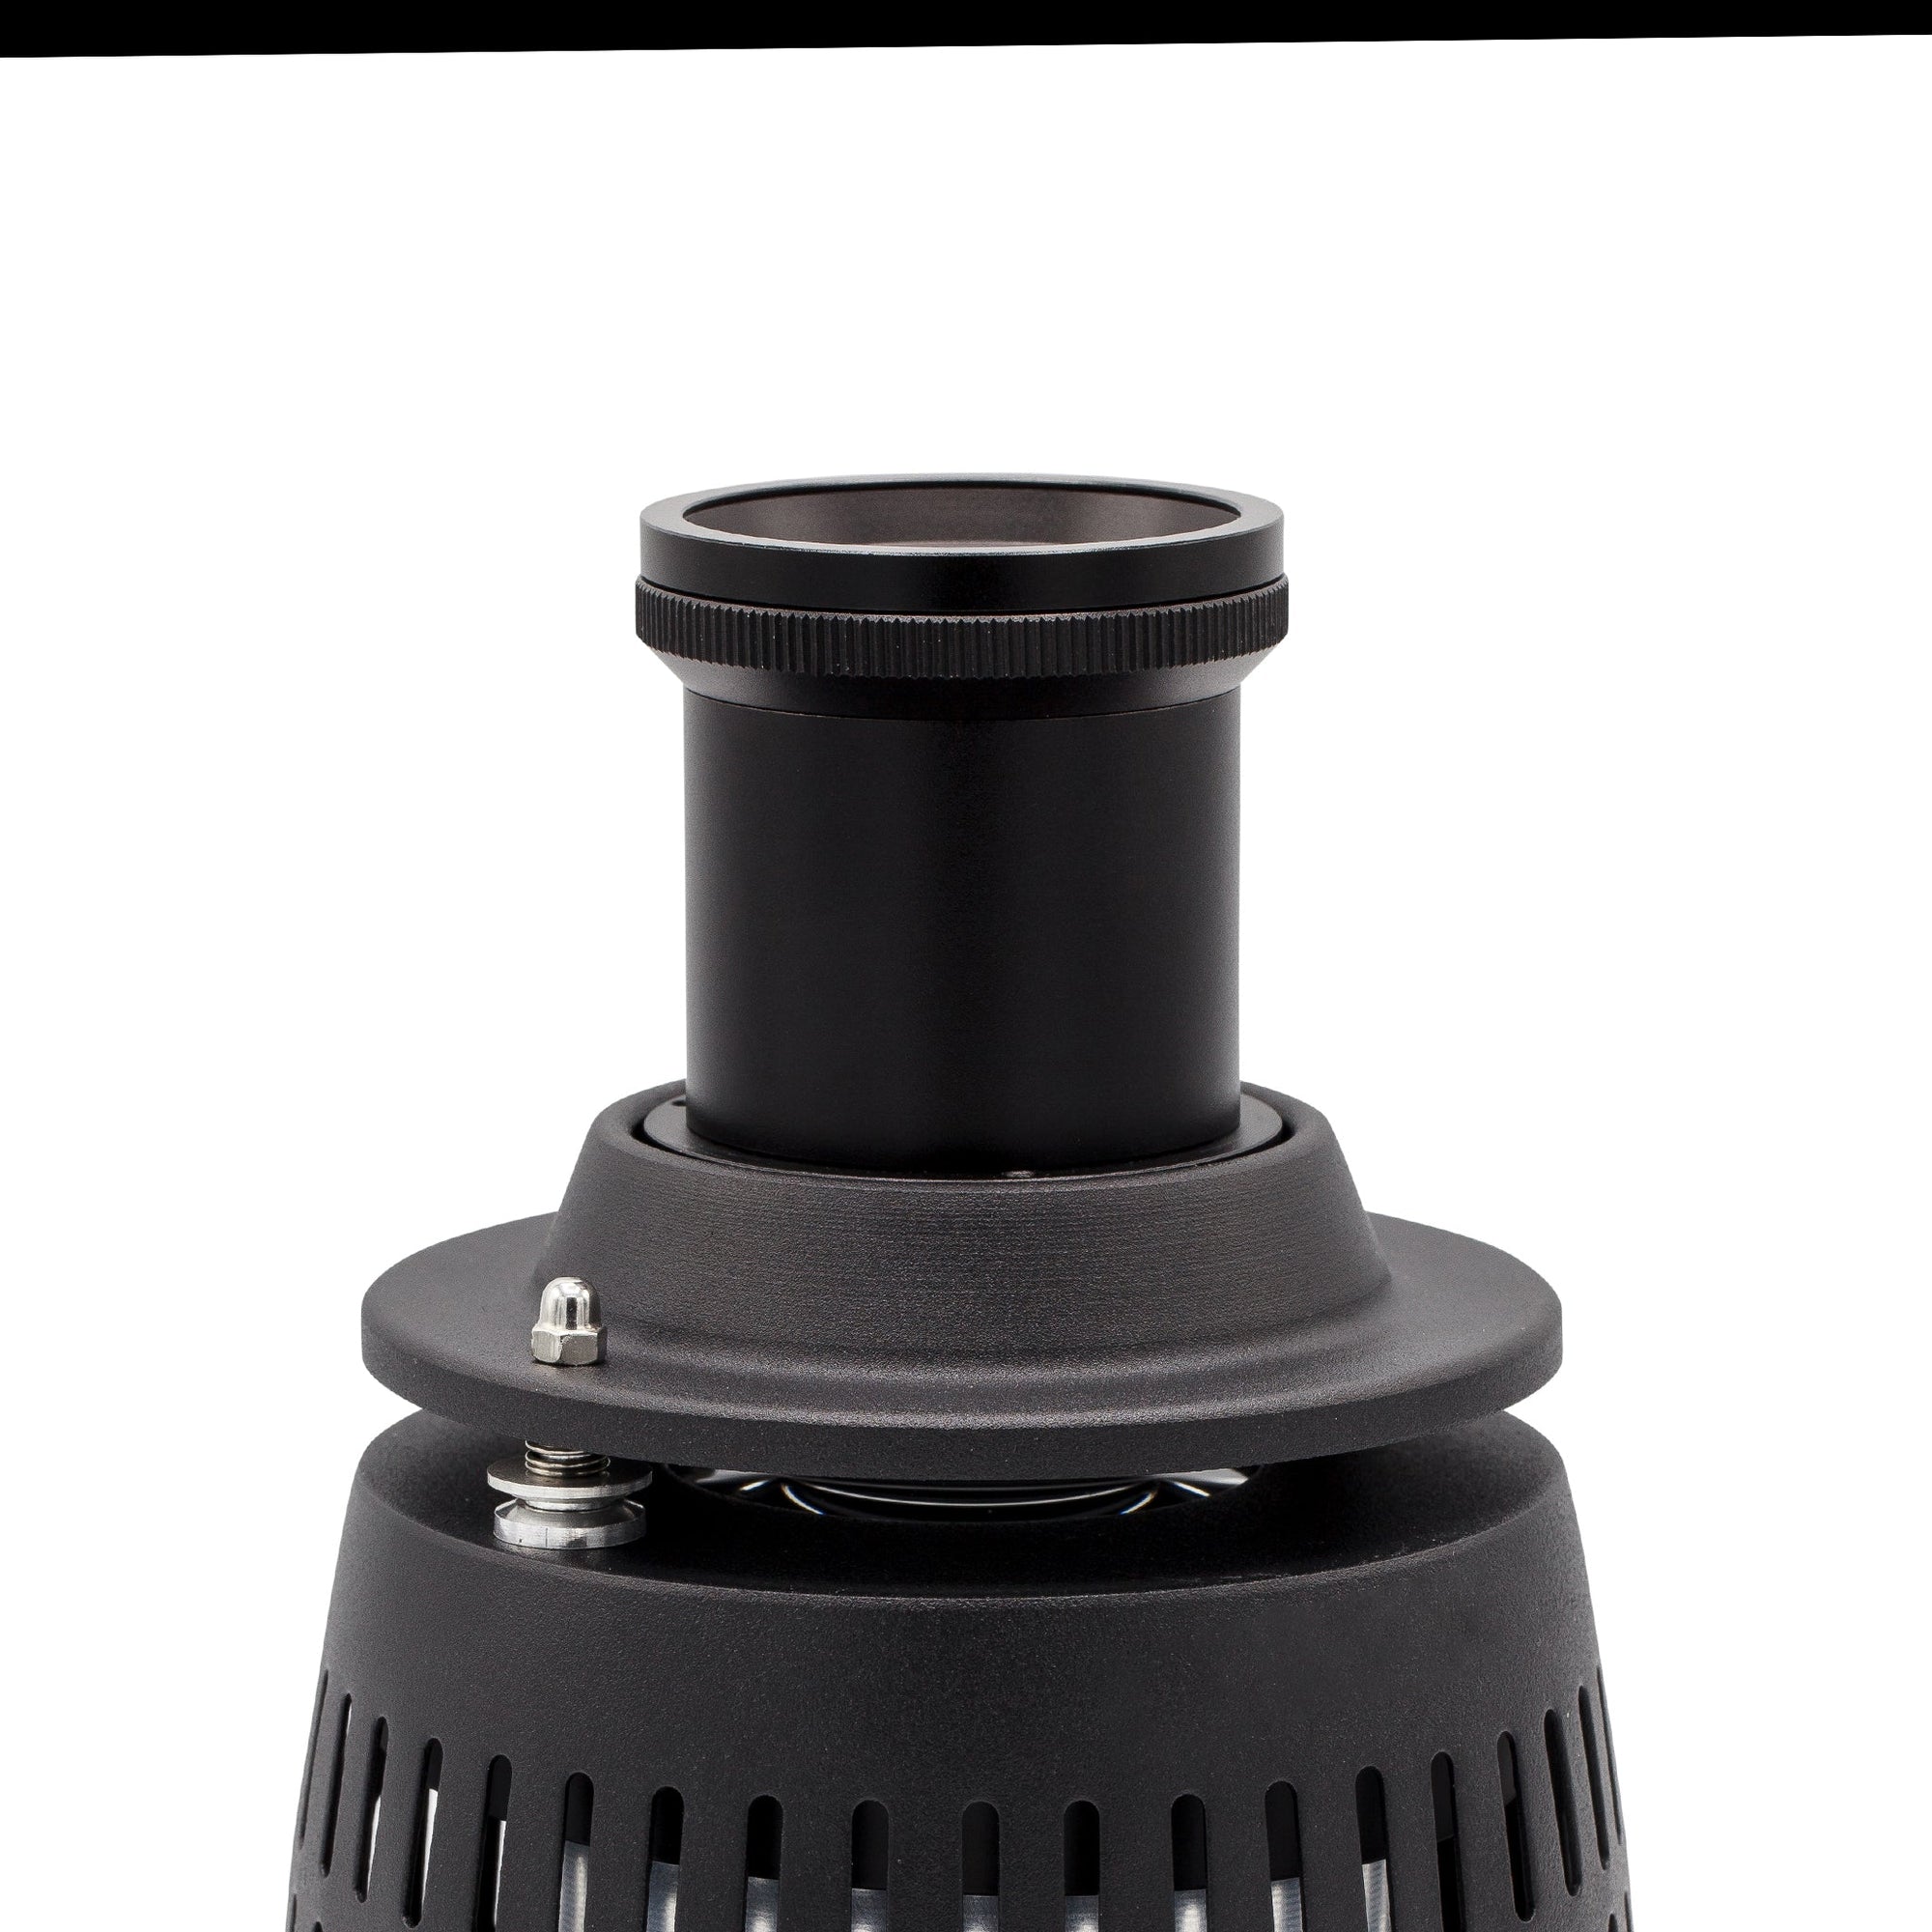 Strobepro 50mm Lens for Optical Snoot II